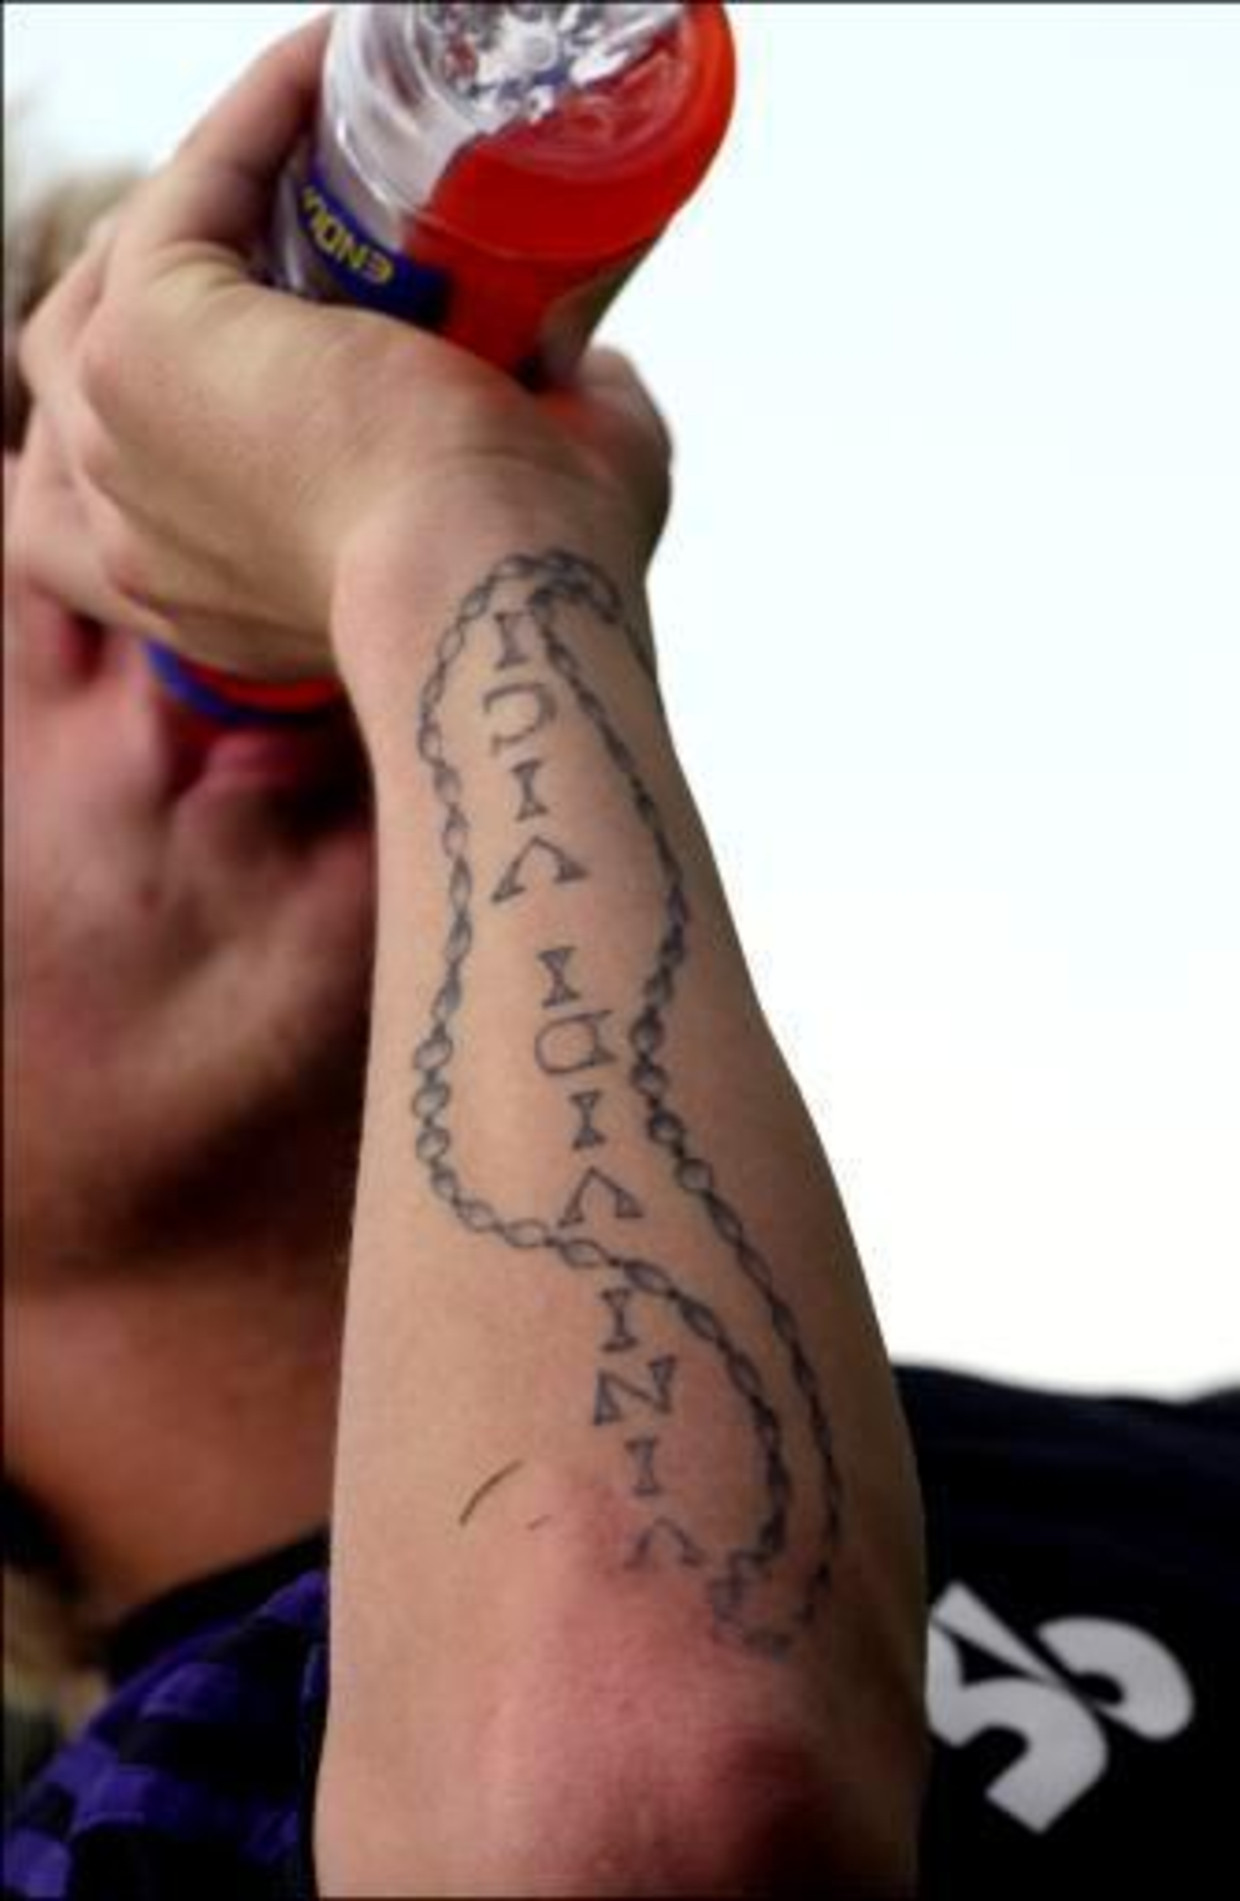 Onwijs Legear pronkt met mislukte tattoo | De Morgen HG-06